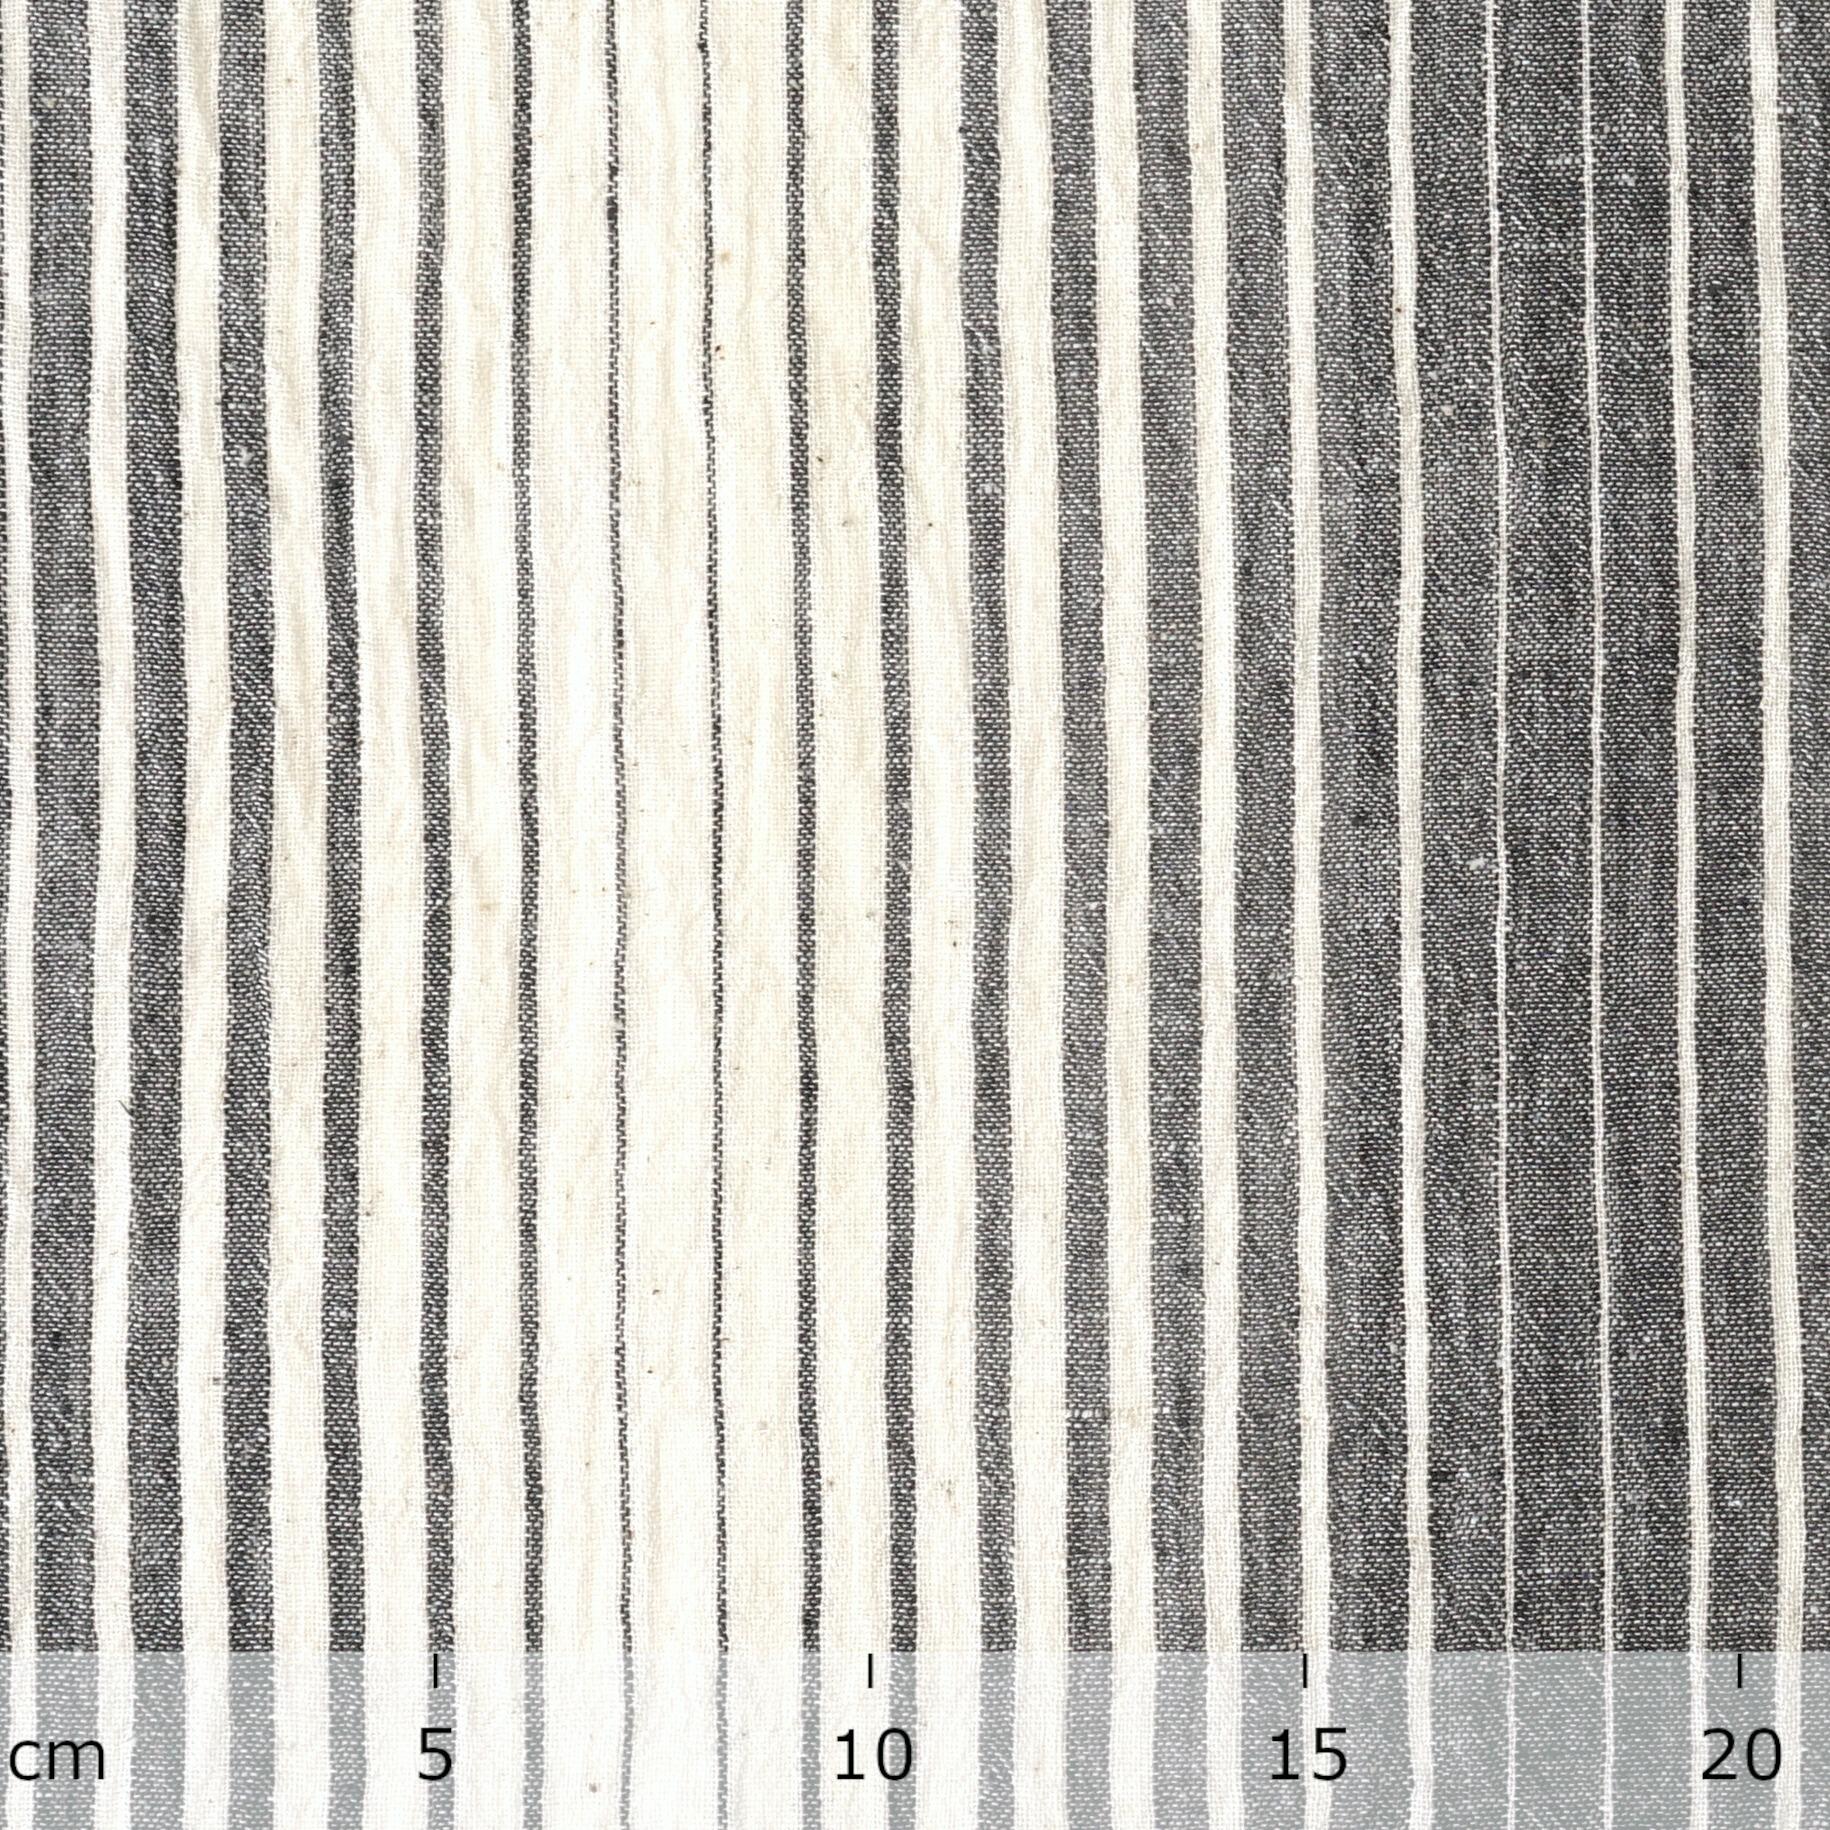 KHE03 - Organic Kala Cotton - Handloom Woven - Natural Dye - Charcoal Black - Fading Stripes - One By One - Ruler